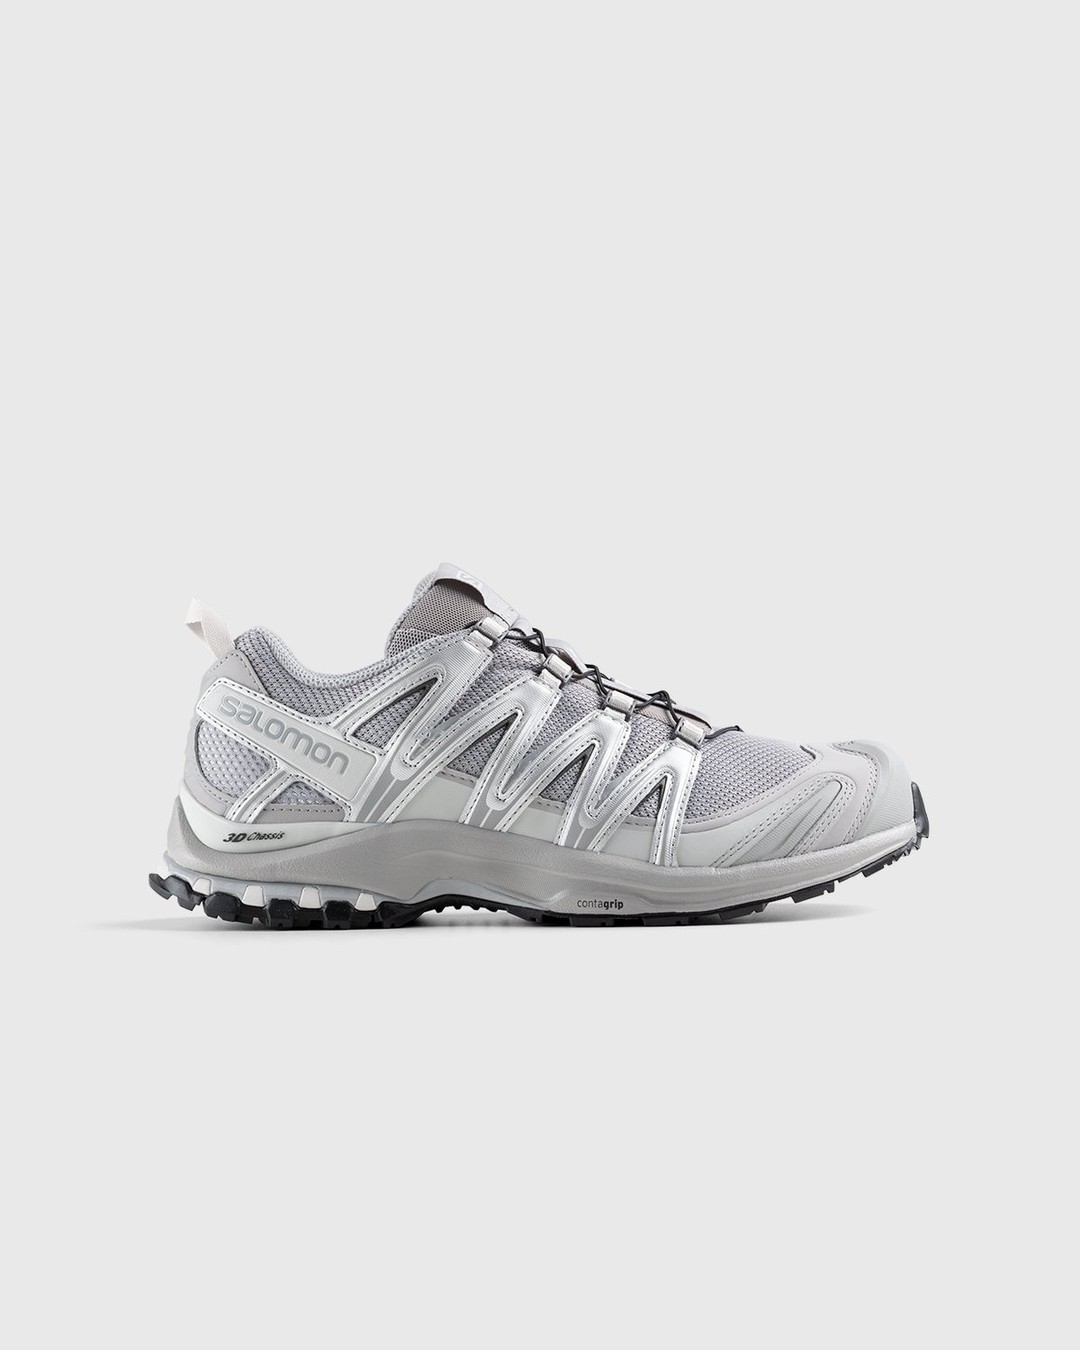 Salomon – XA Pro 3D Alloy/Silver/Lunar Rock - Low Top Sneakers - White - Image 1